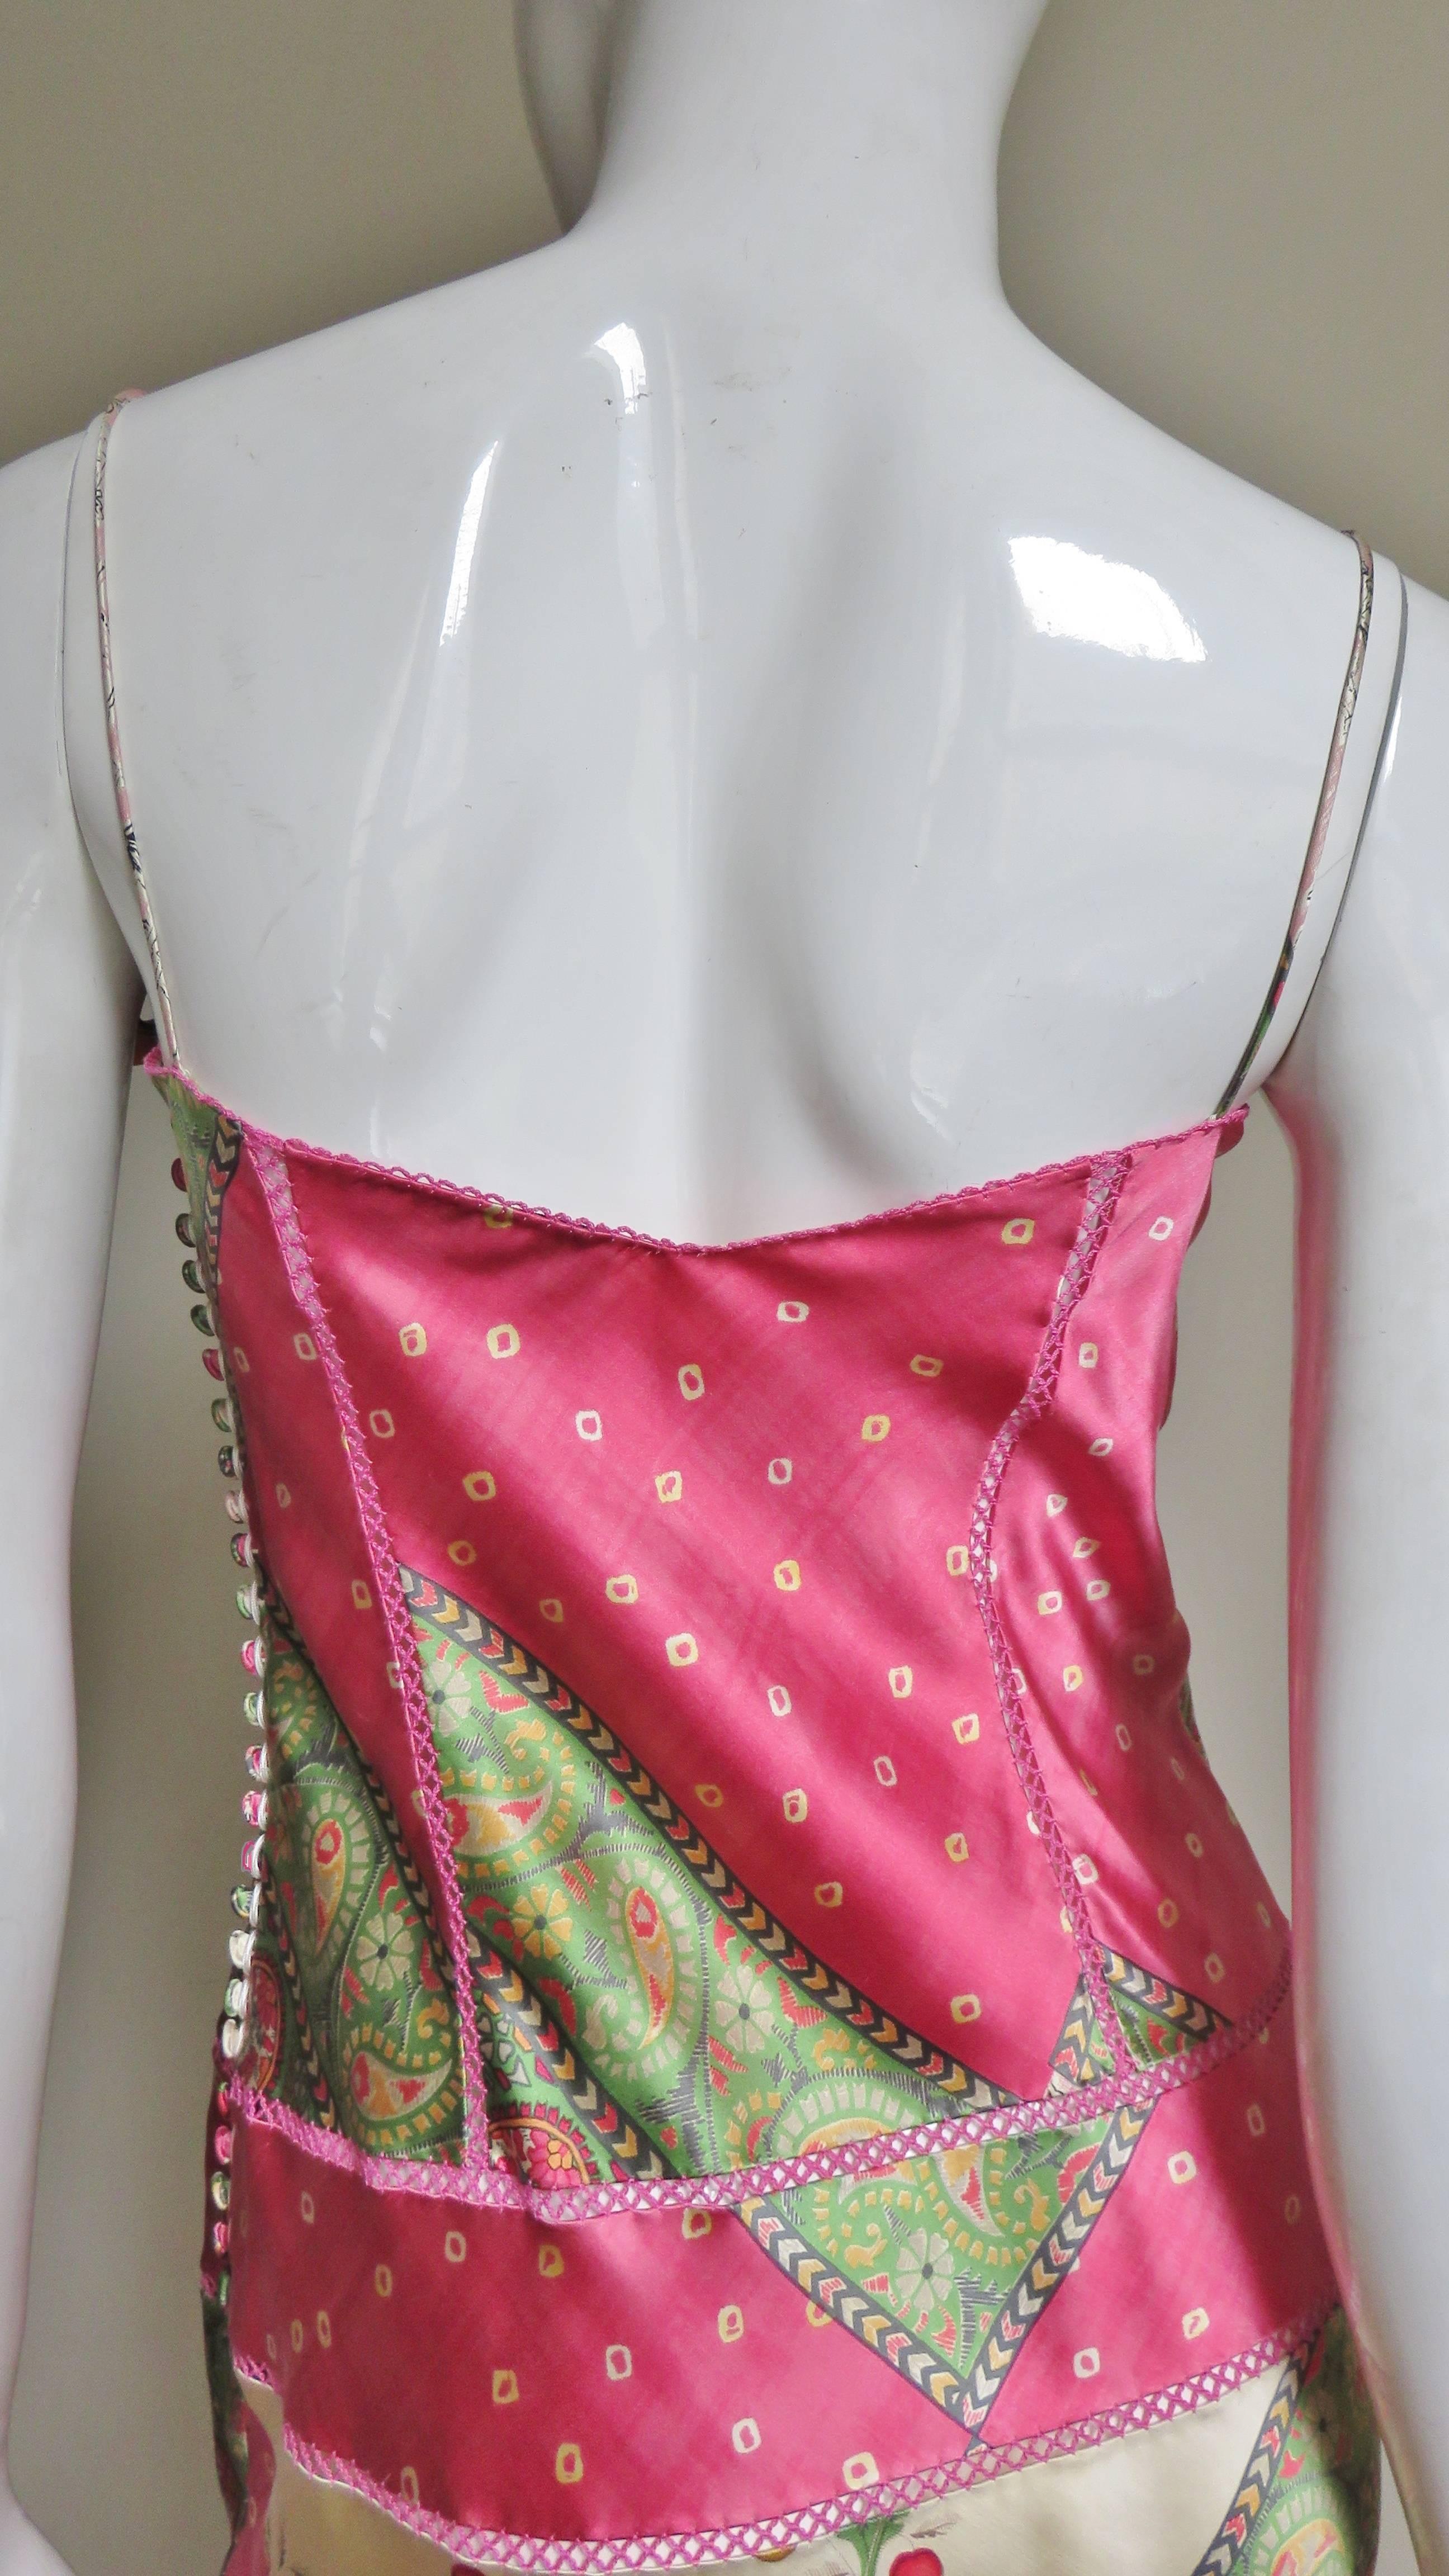 John Galliano for Christian Dior S/S 2004 Mixed Print Silk Slip Dress For Sale 4